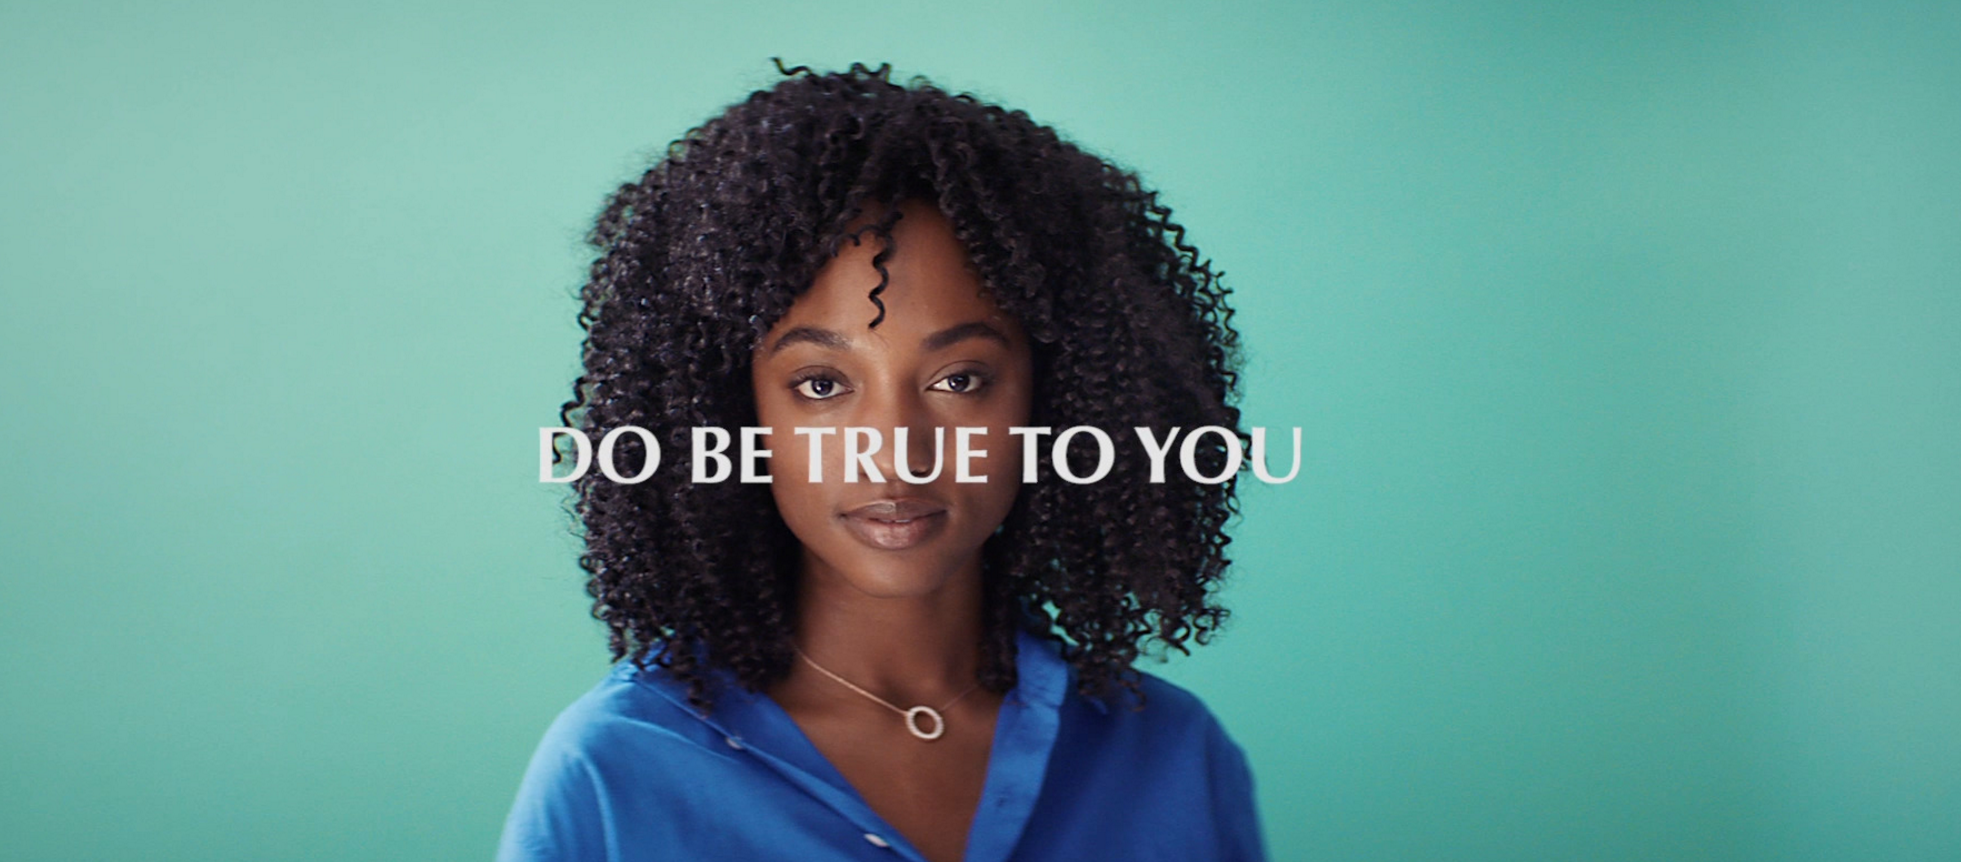 Pandora tells women 'do be true to you' in new global campaign Mumbrella